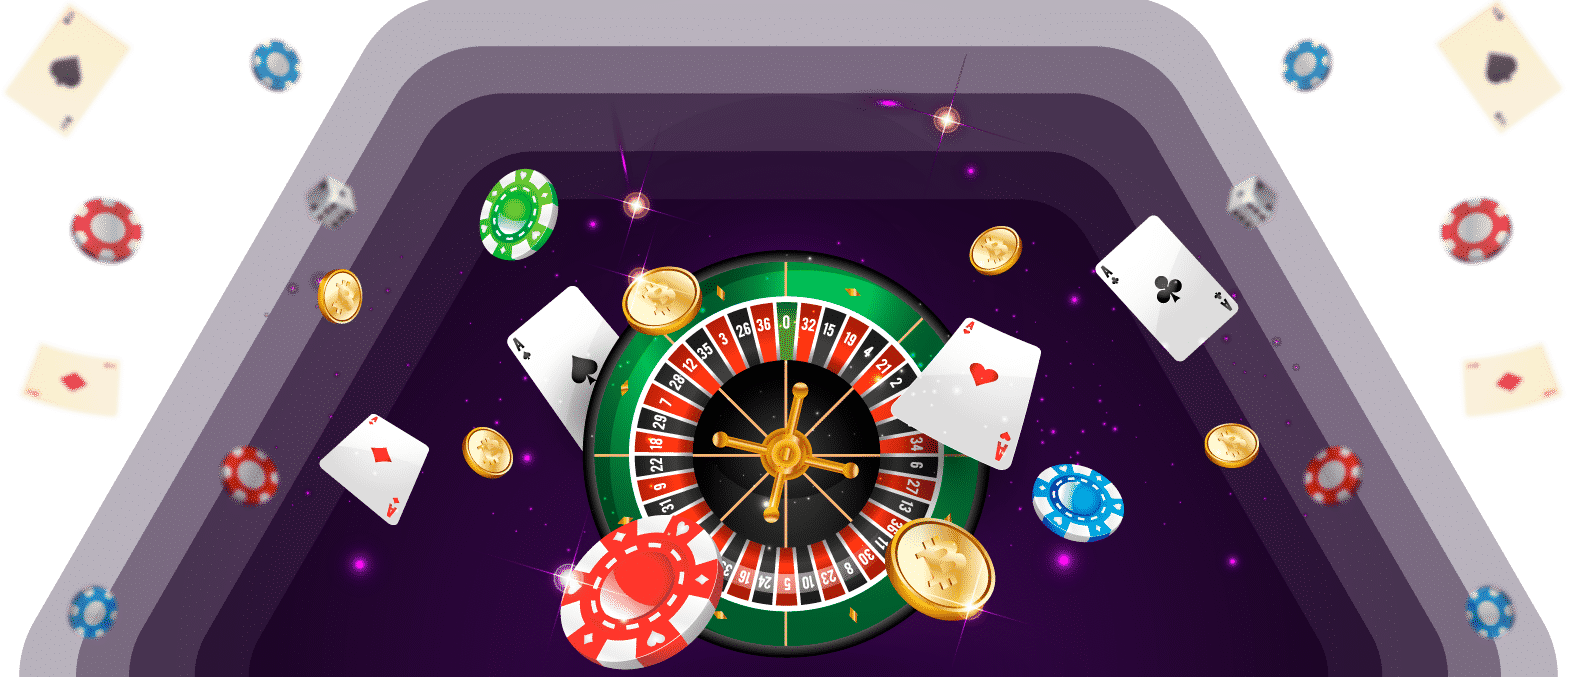 free bitcoins casino